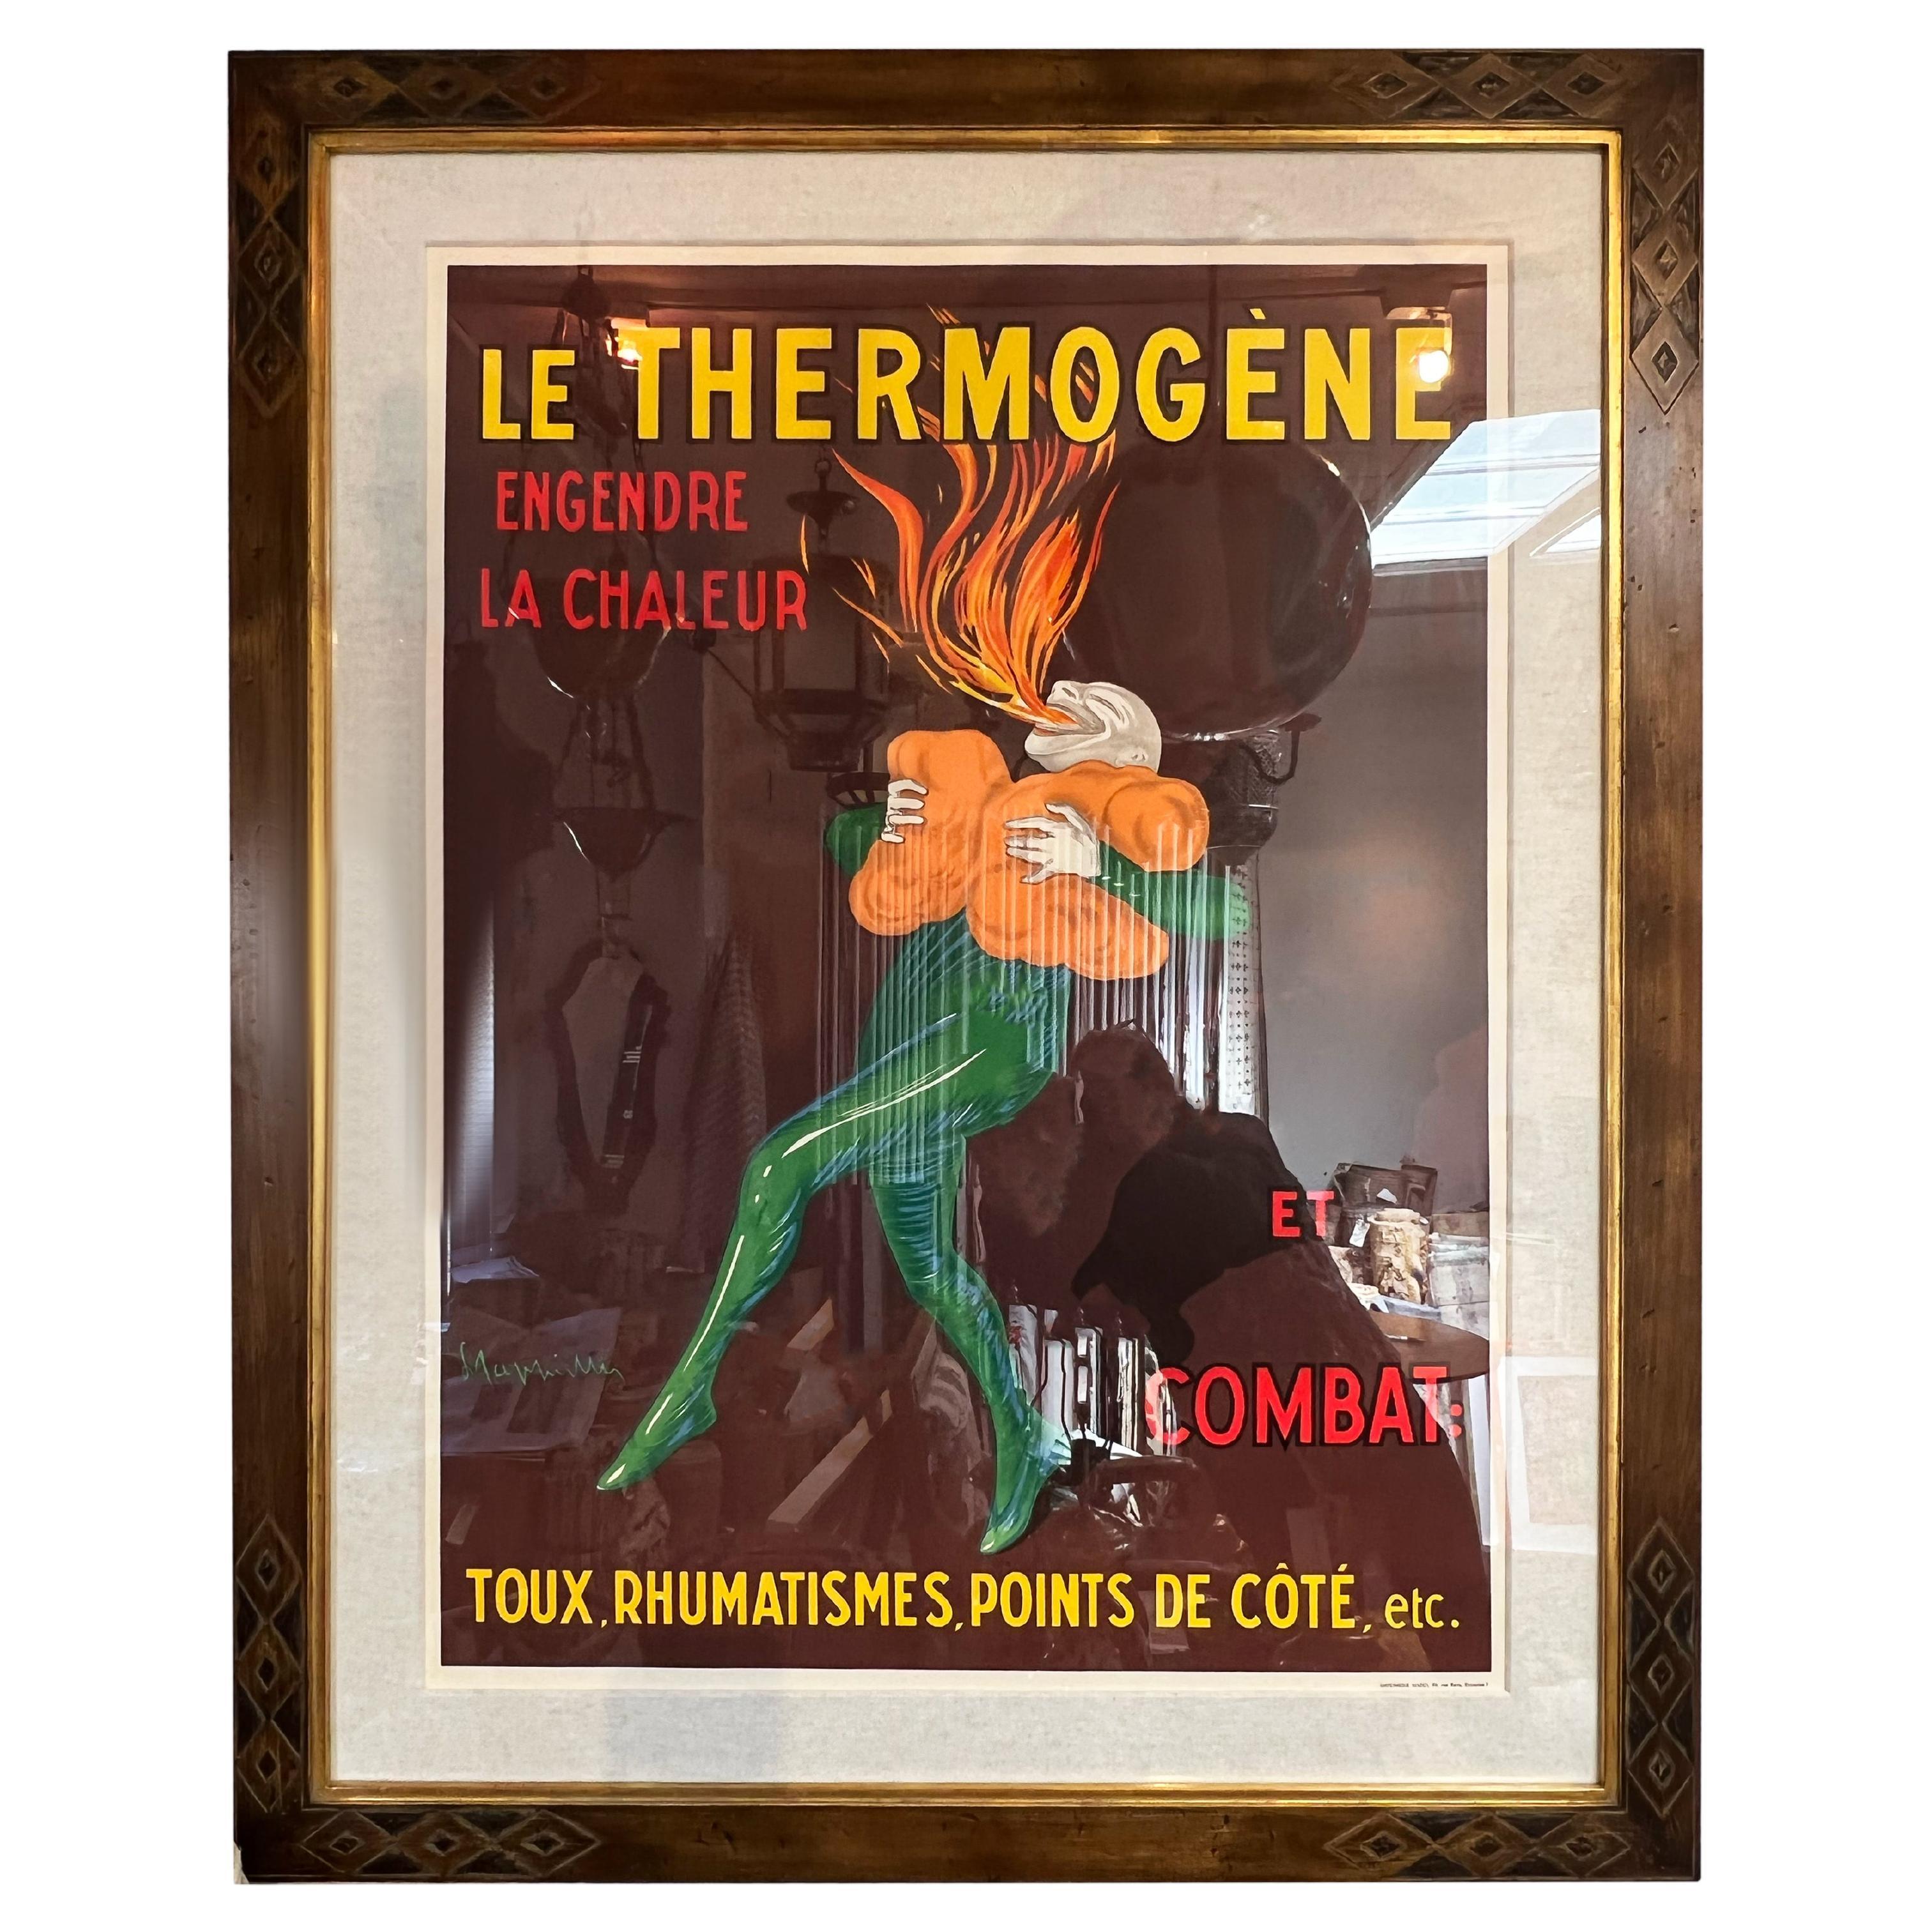 Framed, Original Vintage "Le Thermogene" Poster by Leonetto Cappiello